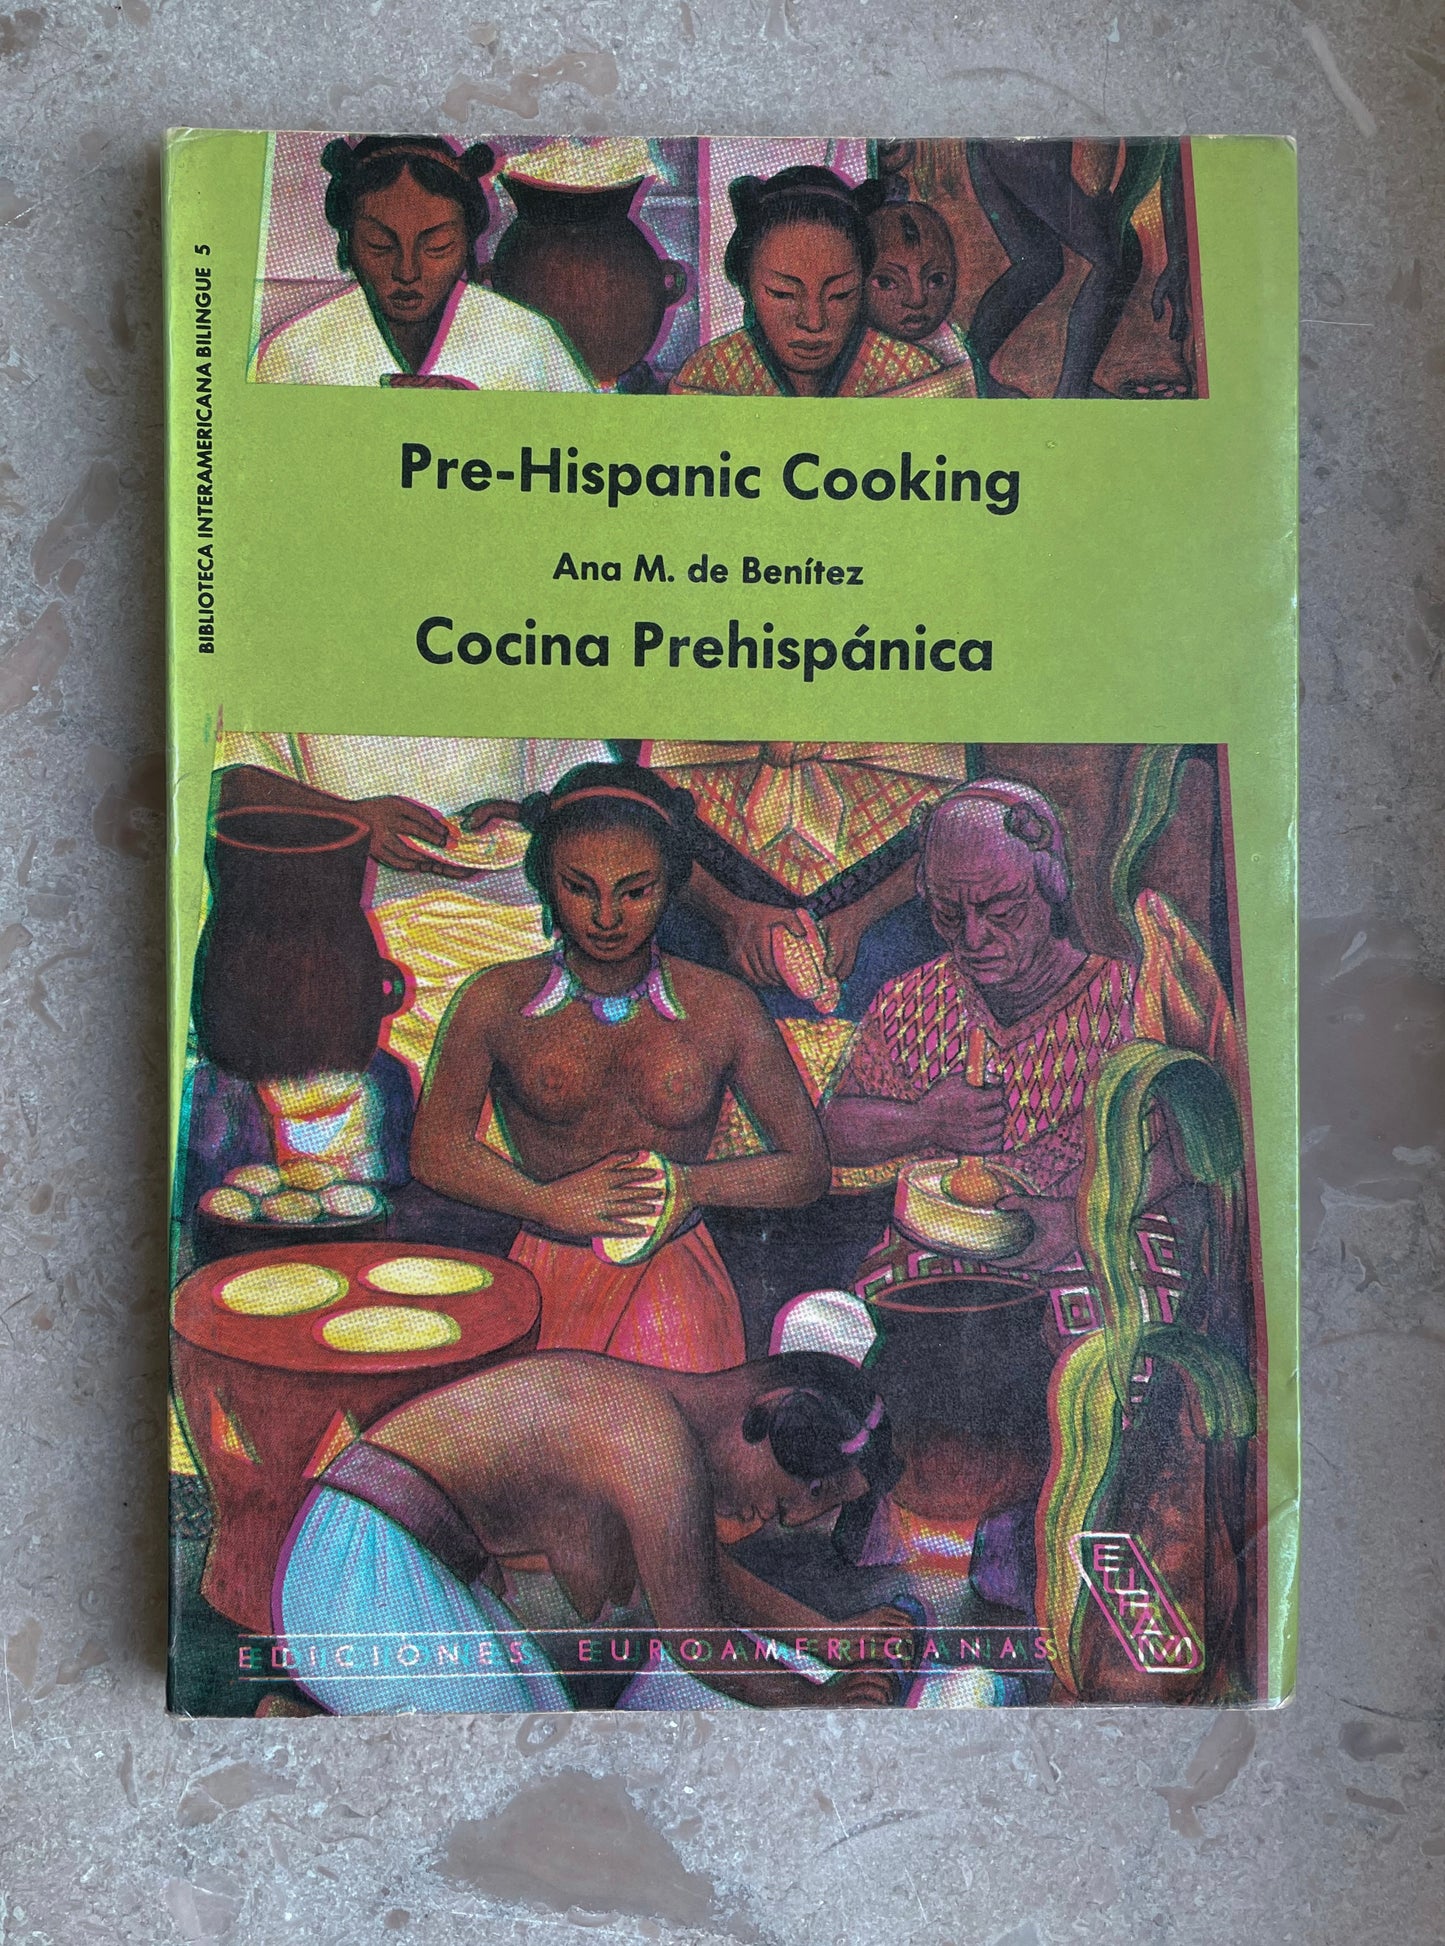 Vintage Cookbook “Pre-Hispanic Cooking”